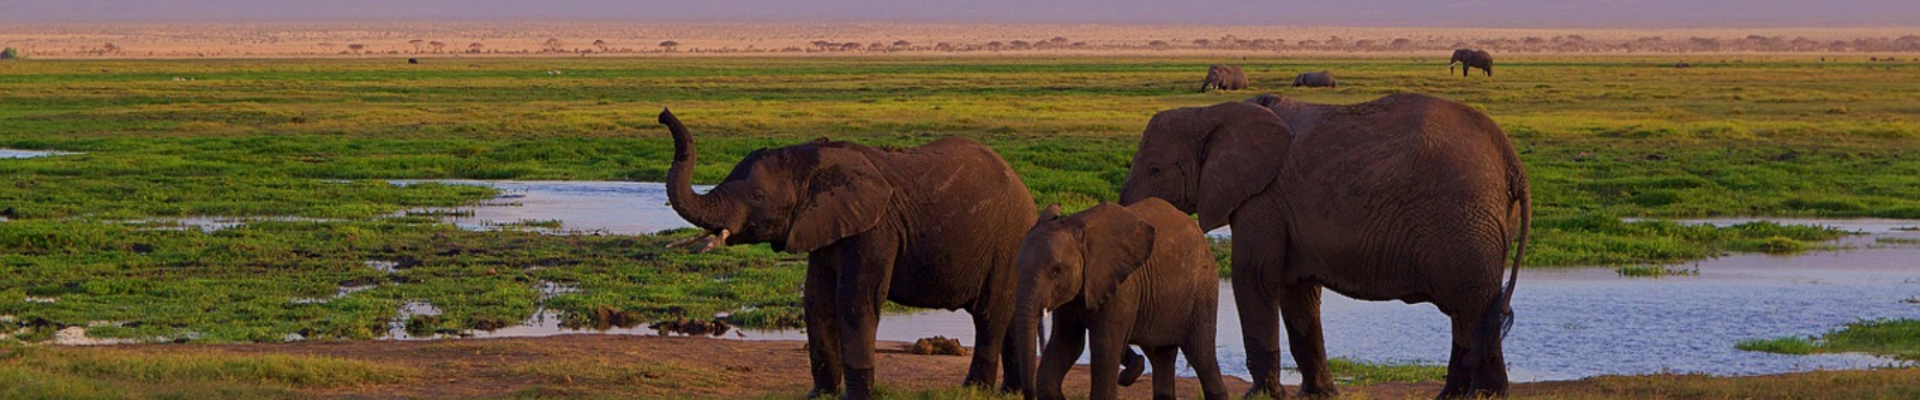 Sawa Africa Adventures - Serengeti and Kilimanjaro